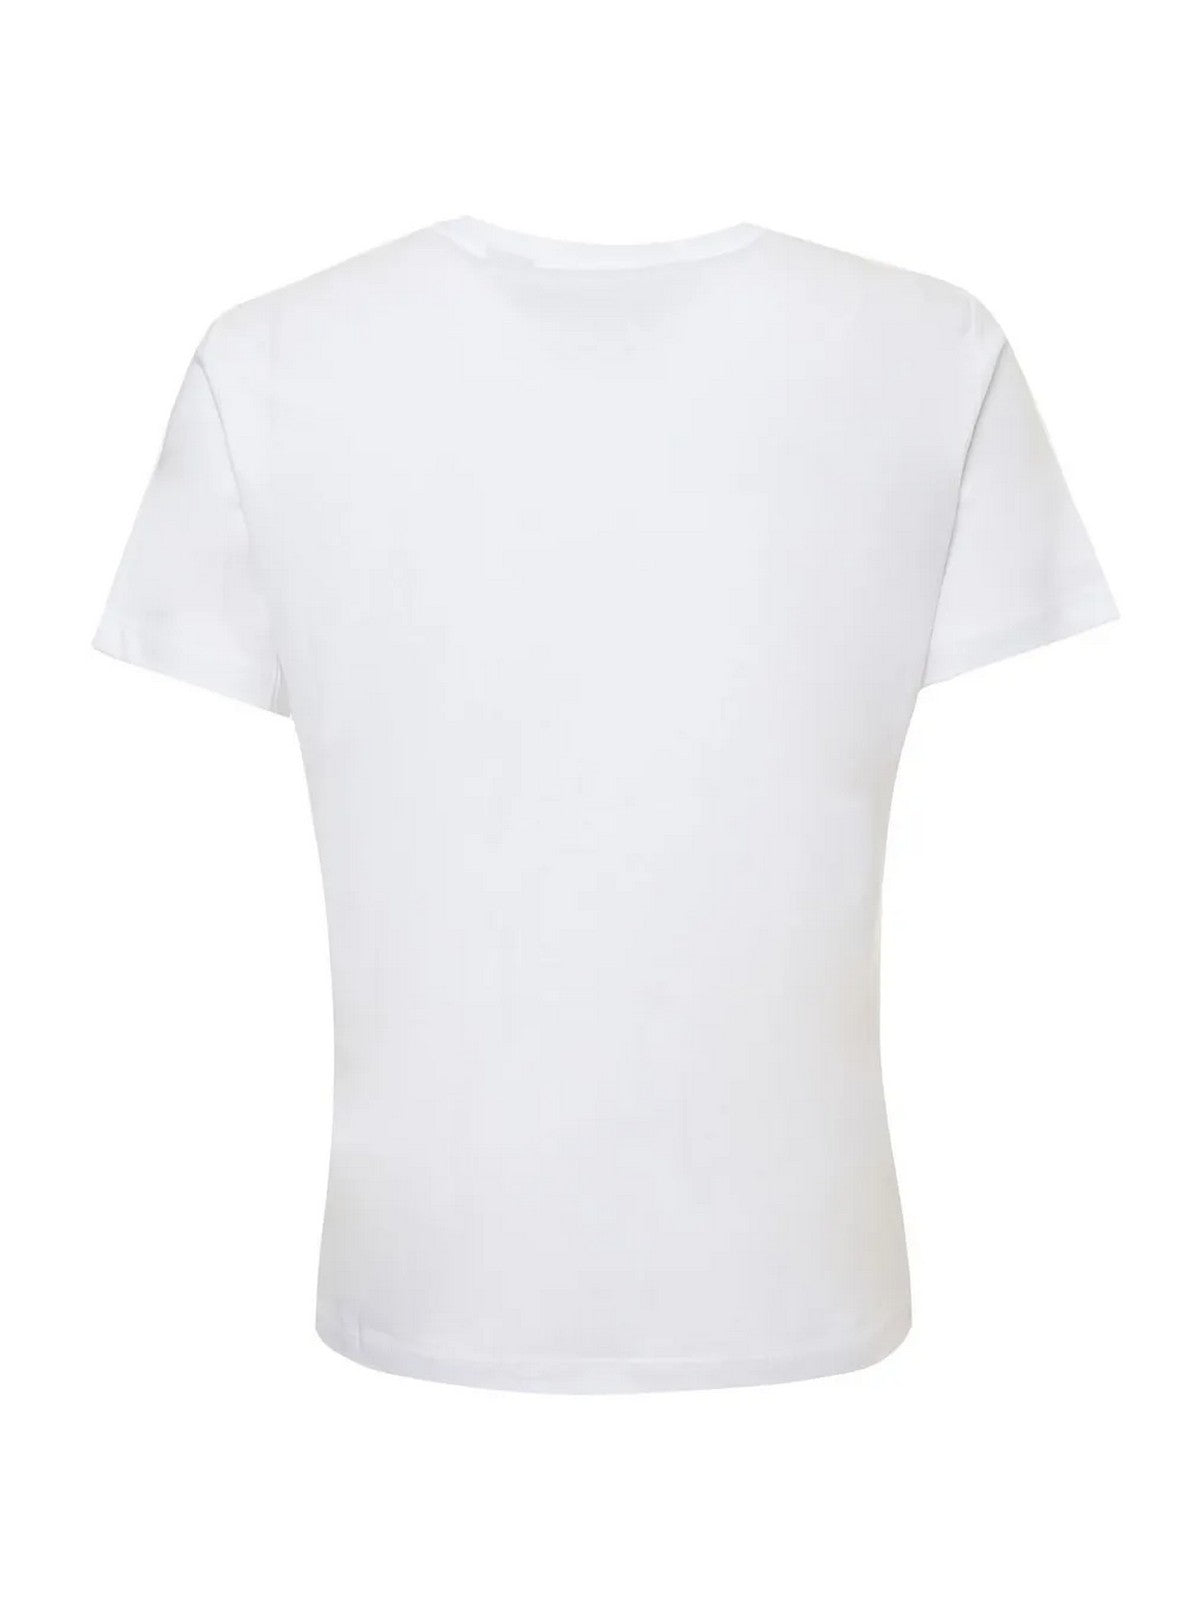 JUST CAVALLI T-Shirt e Polo Donna  75PAHE00 CJ110 003 Bianco